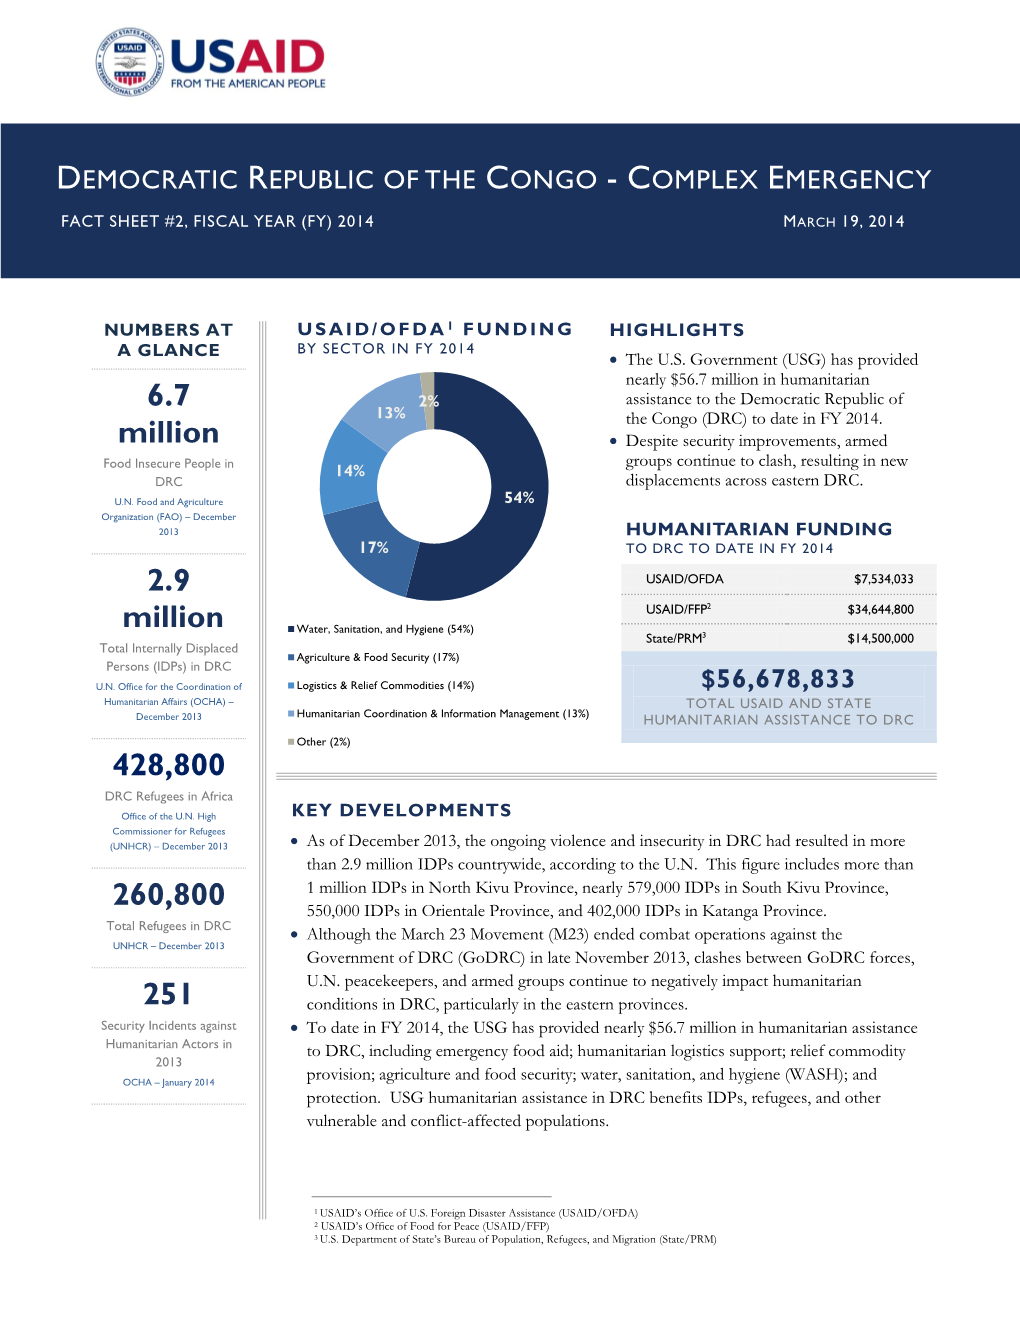 Democratic Republic of the Congo Complex Emergency 03-29-2014